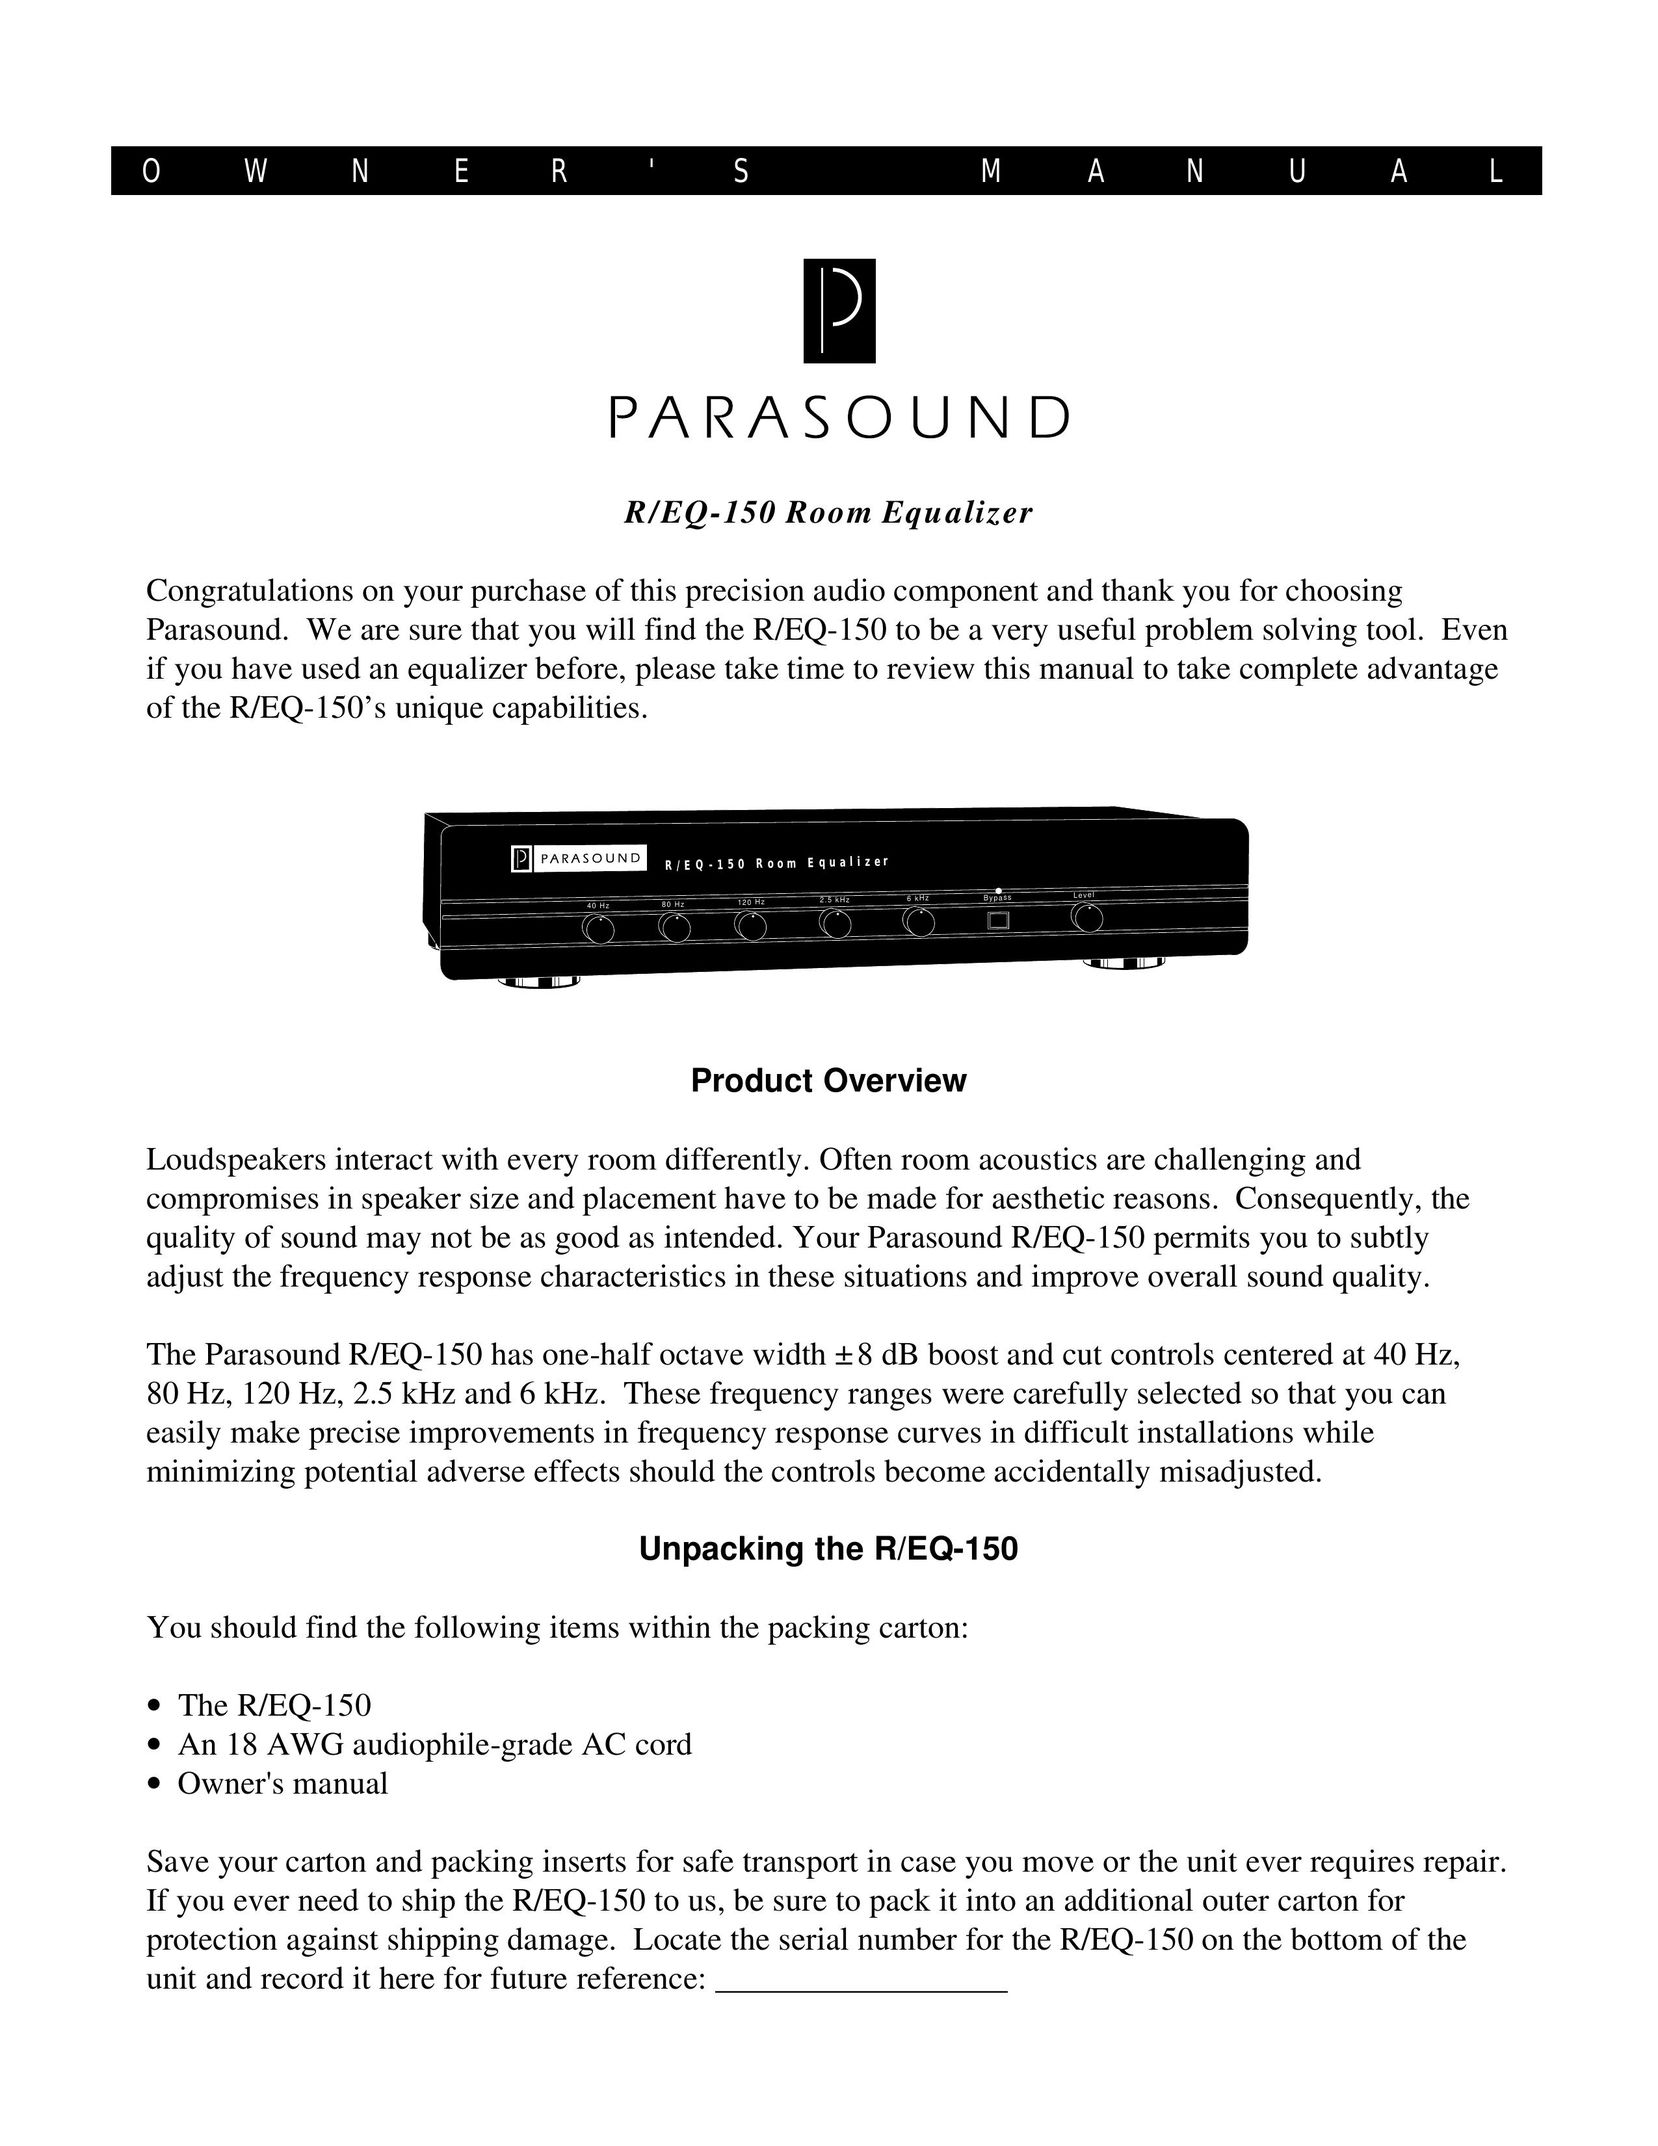 Parasound TDQ-150 Stereo Equalizer User Manual